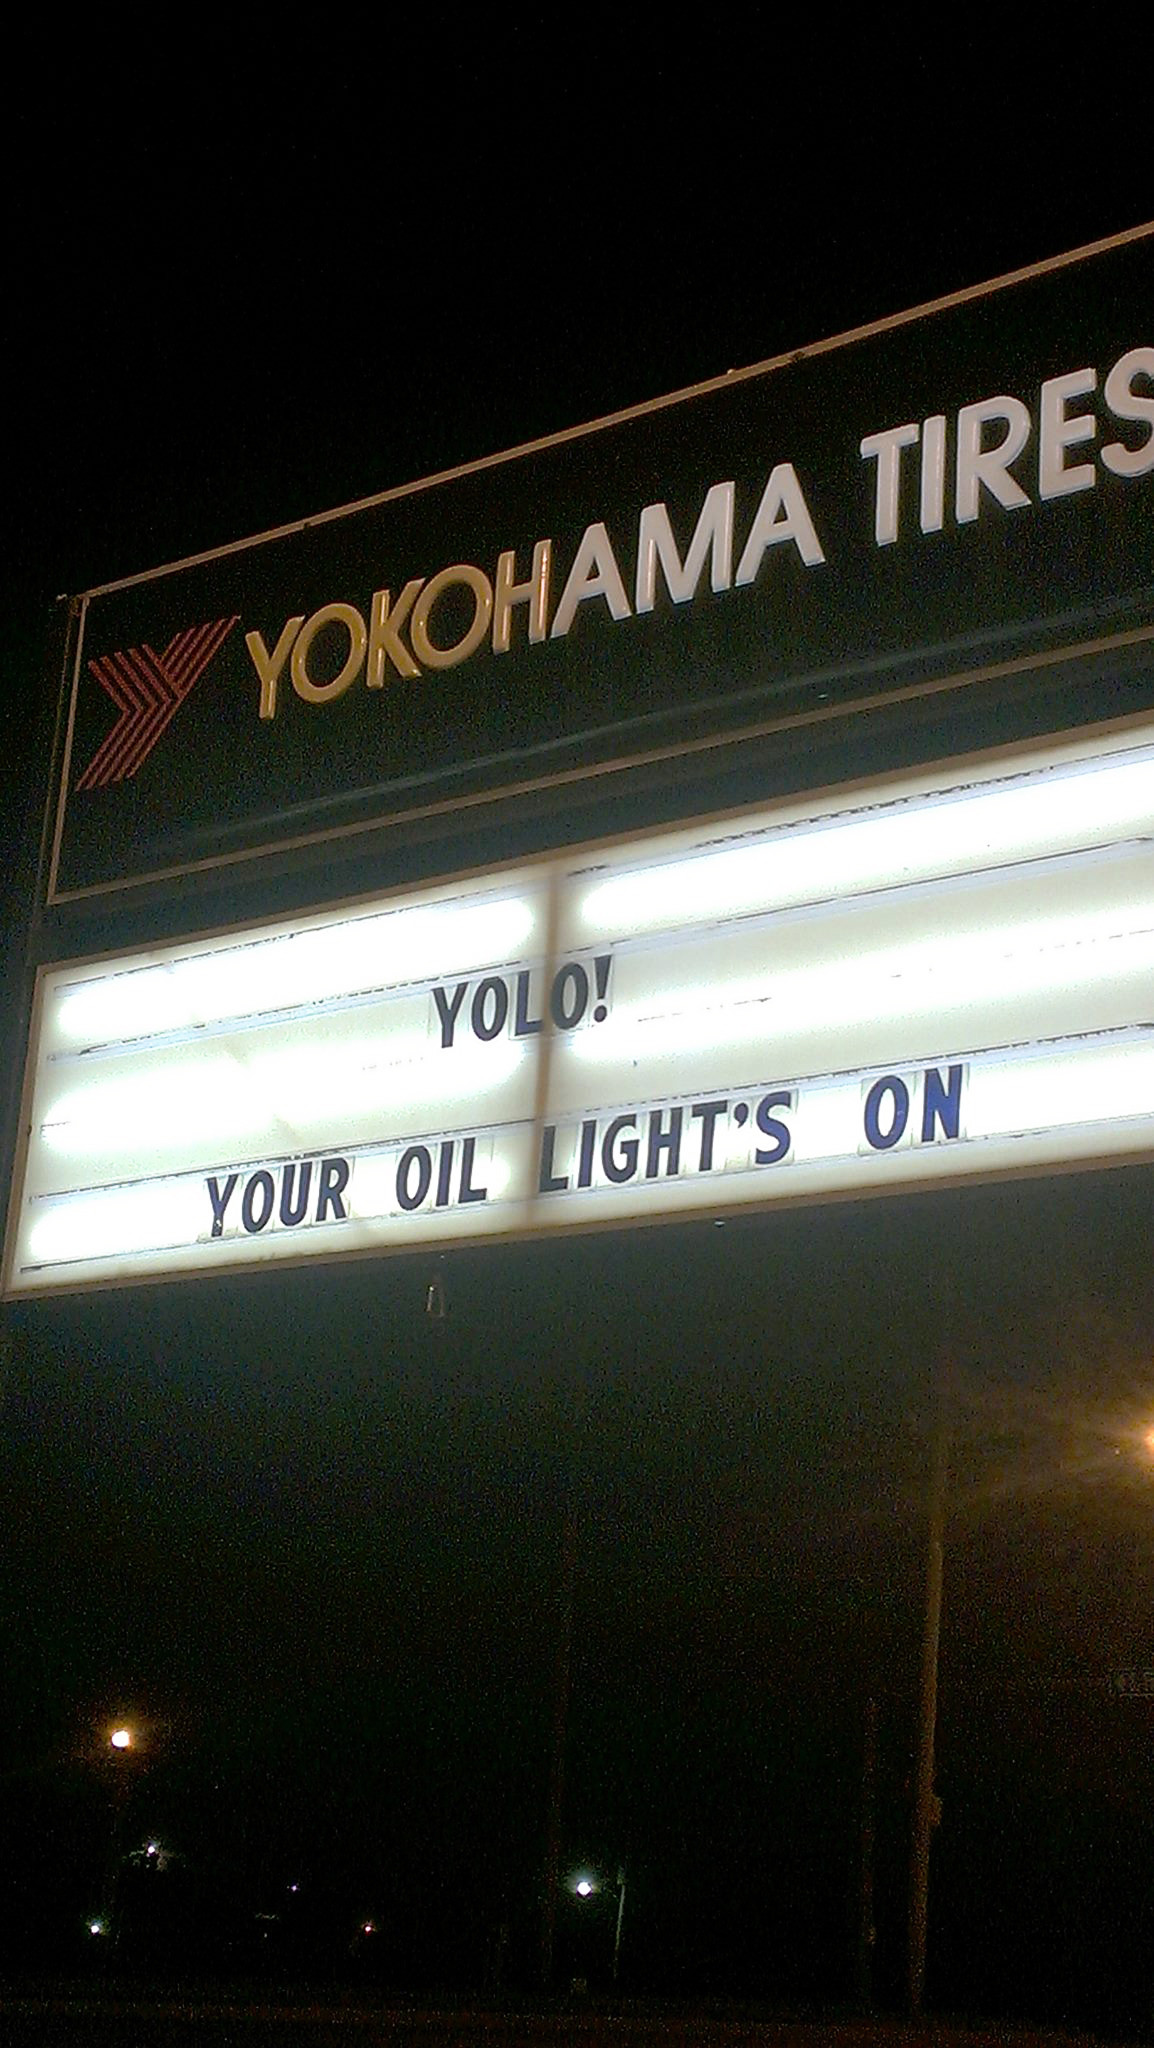 display device - Yokohama Tires Yolo! Your Oil Light'S On